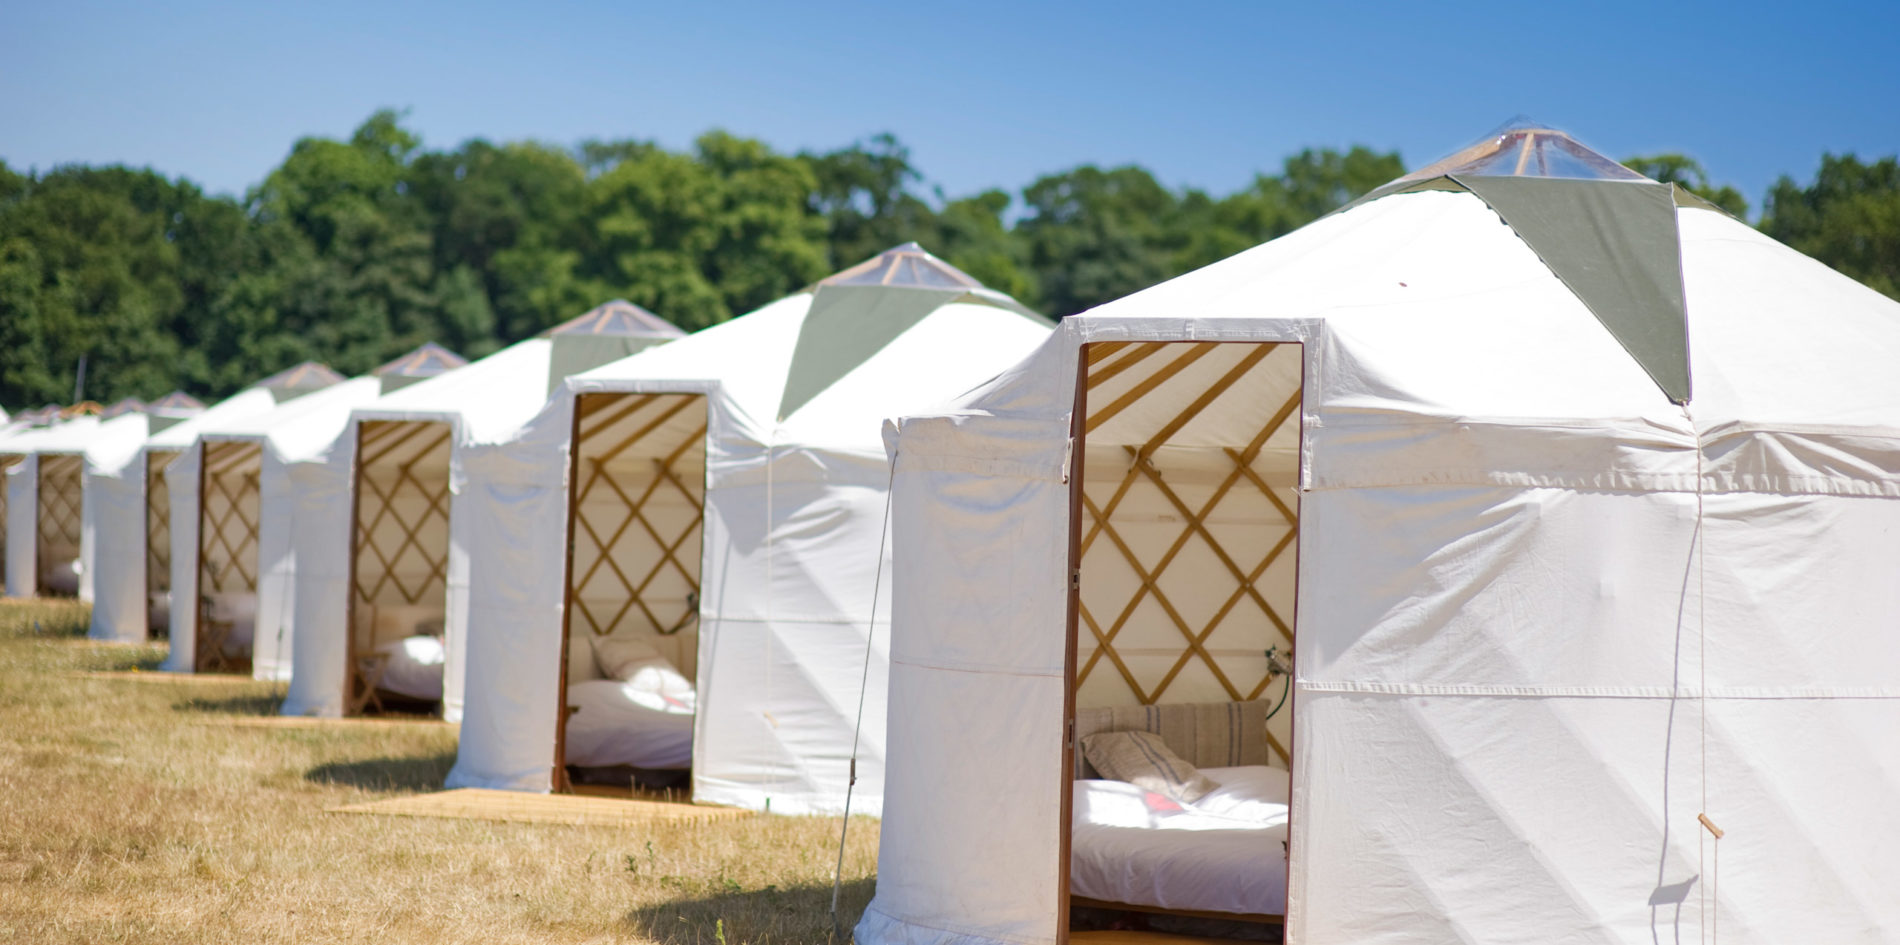 rows of yurts - luxury yurt camping accommodation